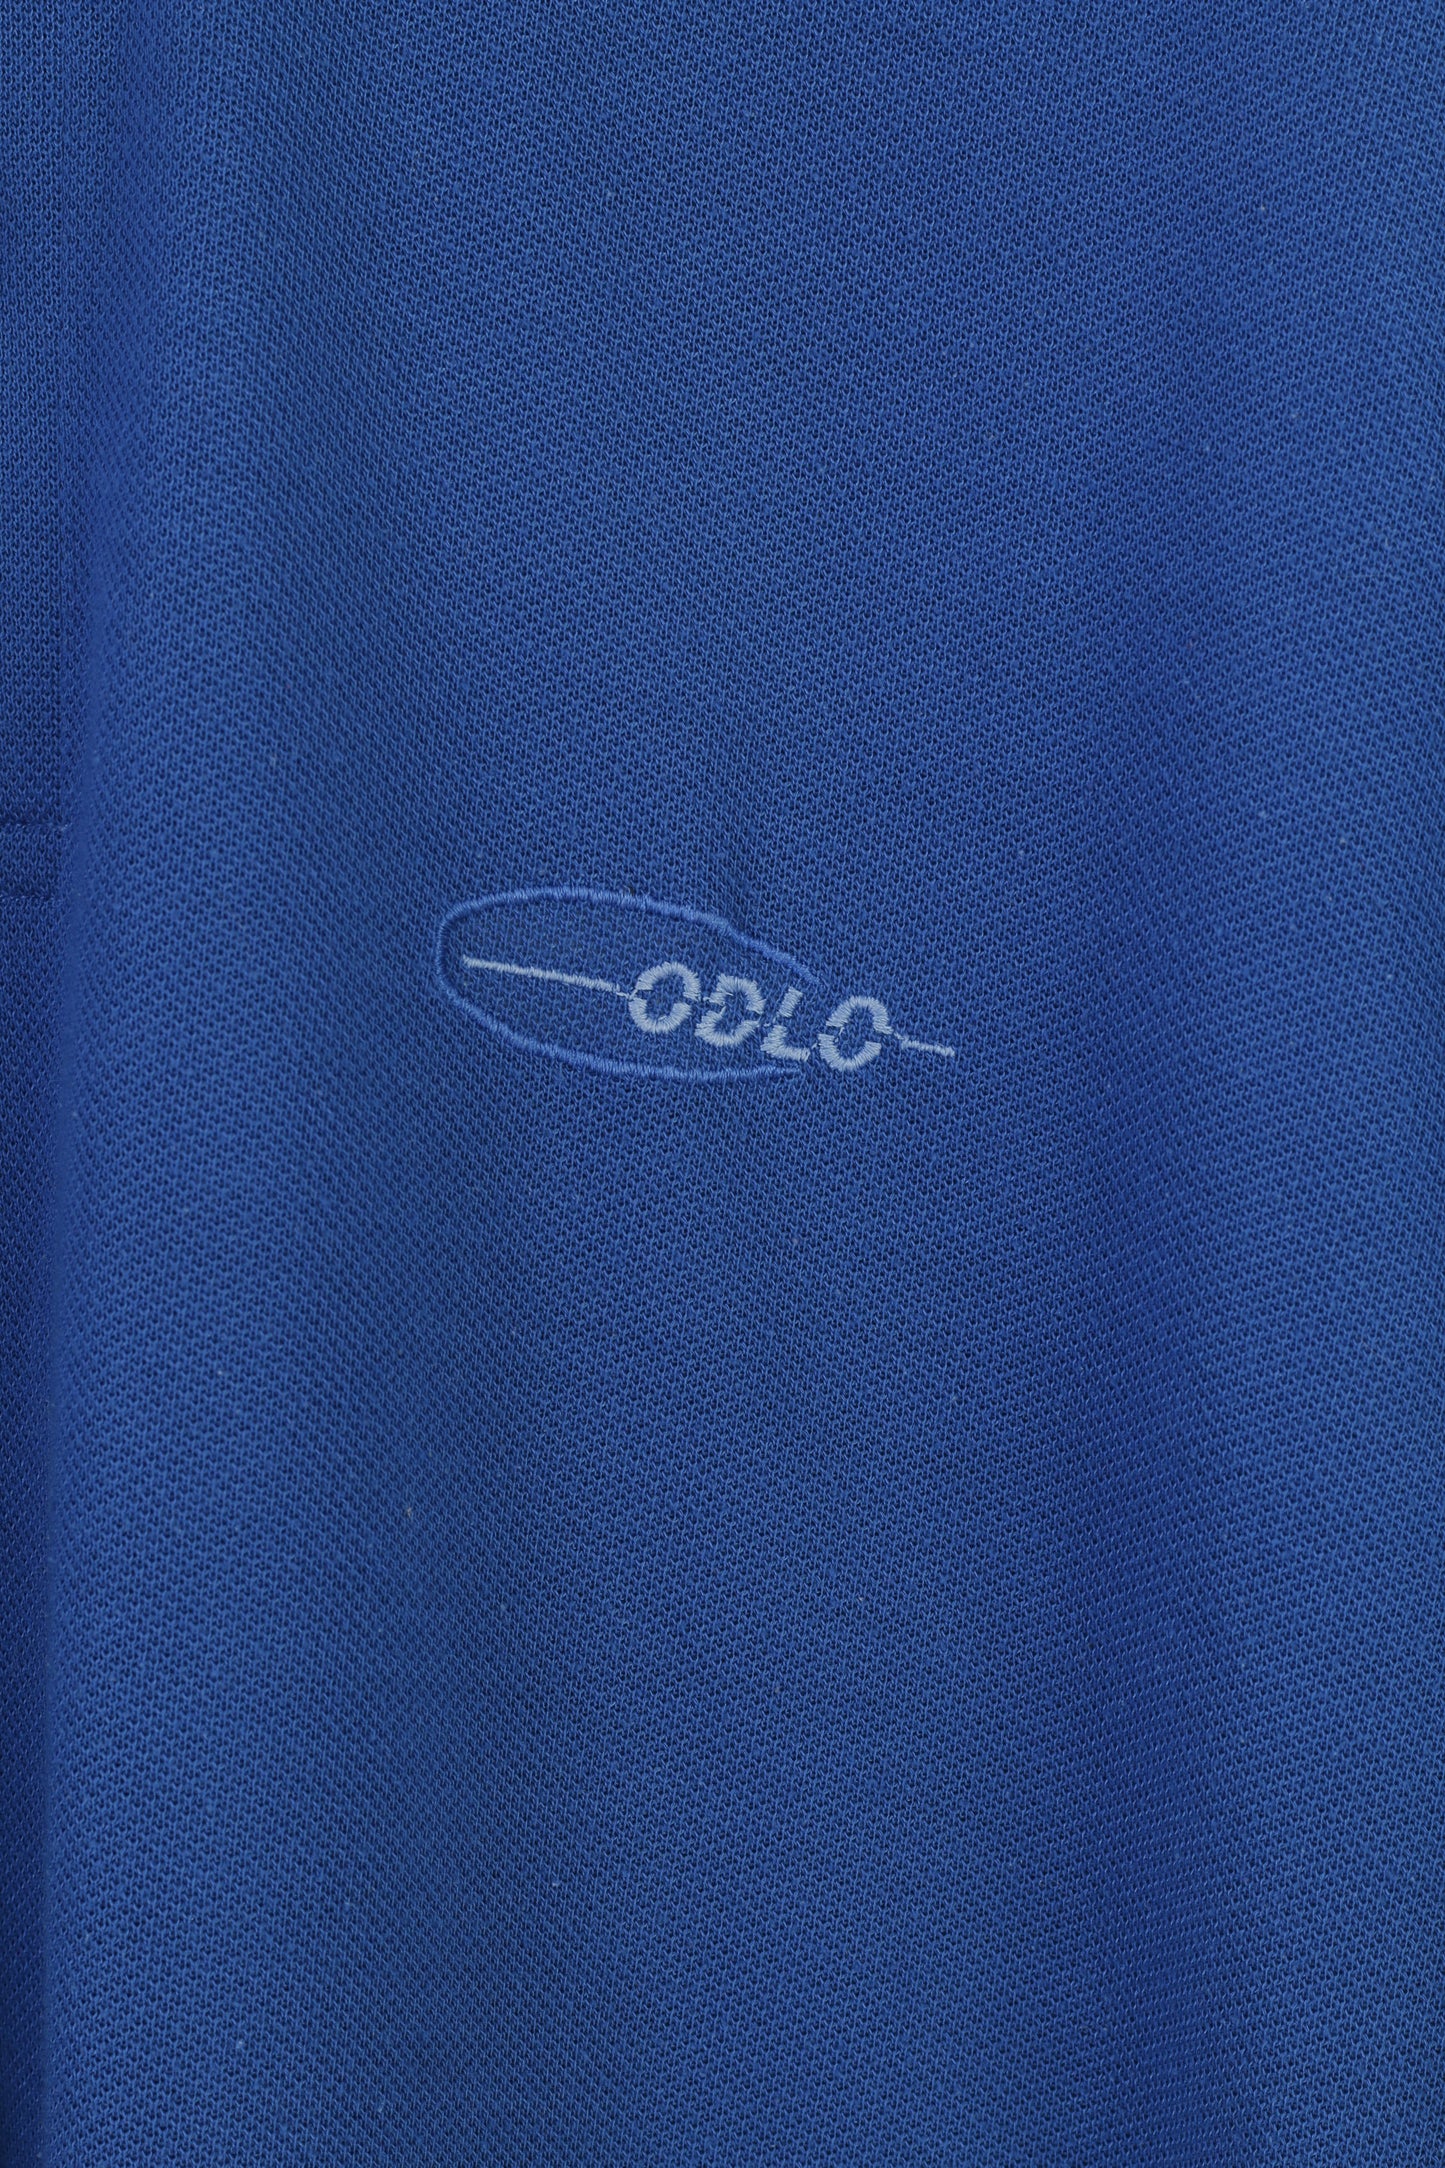 Odlo Men XL Polo Shirt Blue Short Sleeve Navy Detailed Bottoms Athletic Clothing System  Collar Vintage Top